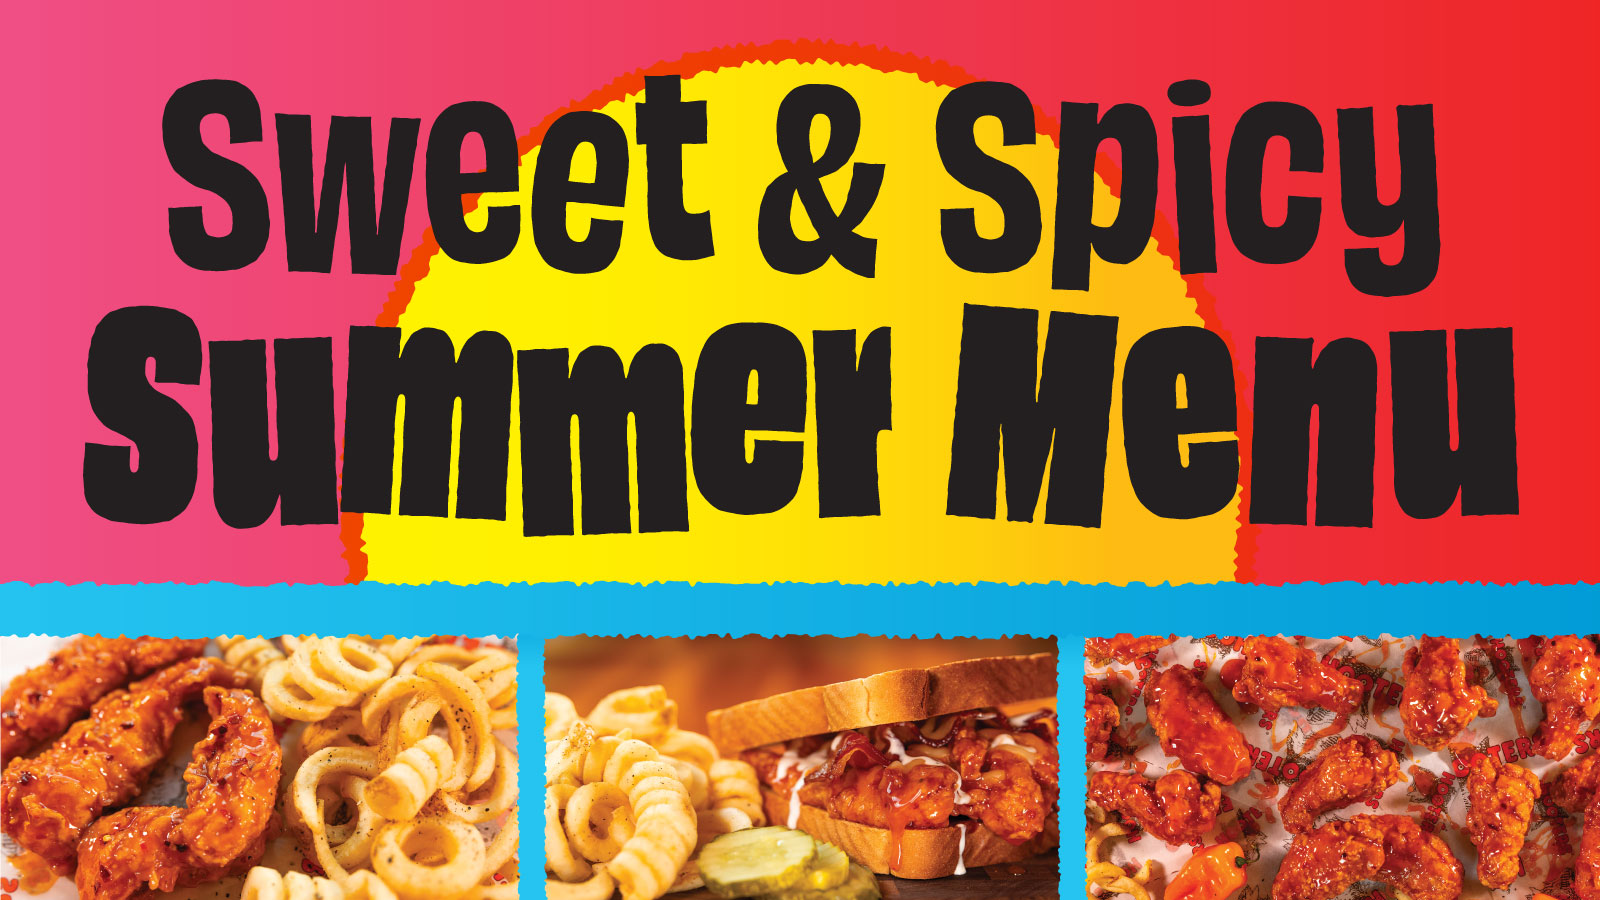 Sweet & Spicy Summer Menu at Hooters